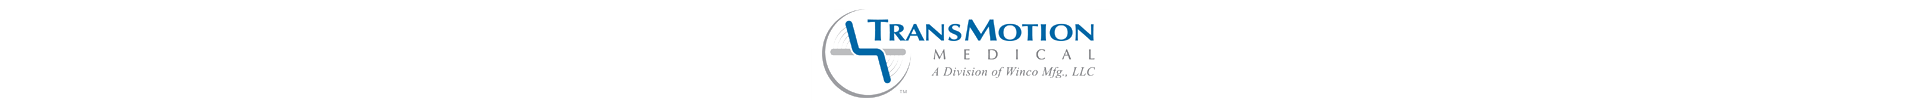 TransMotion Medical